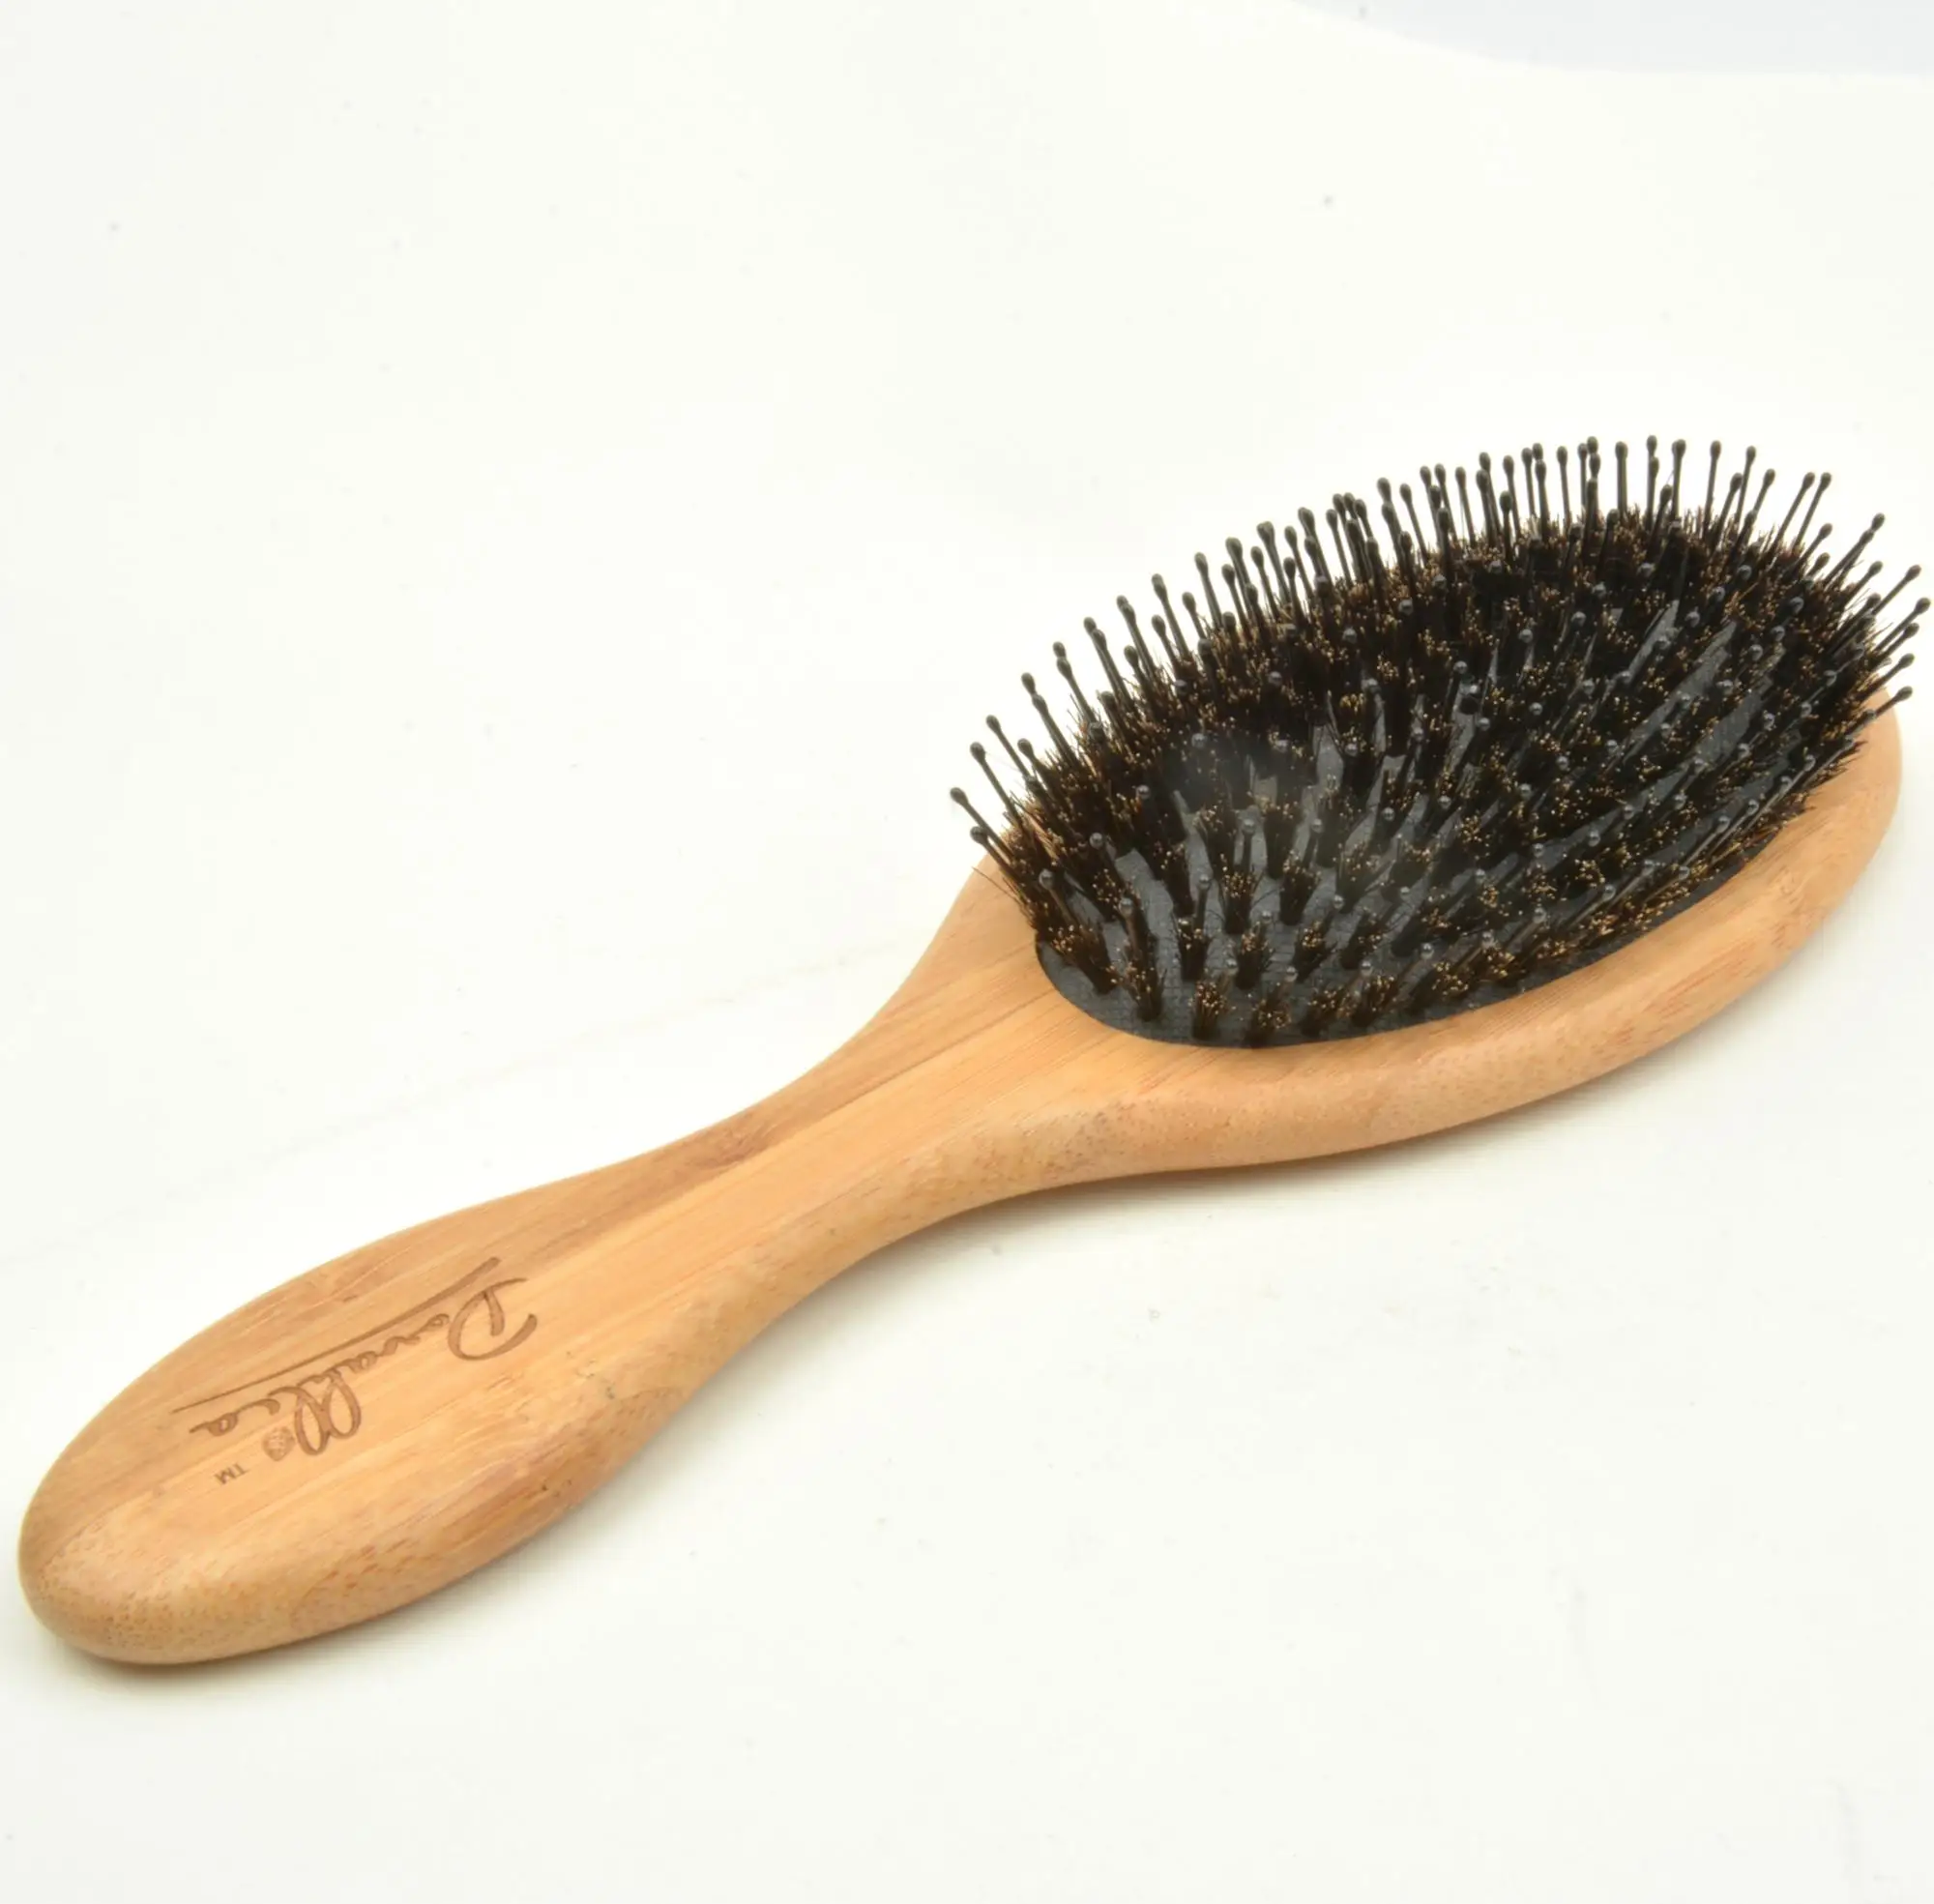 high quality boar bristle hair brush